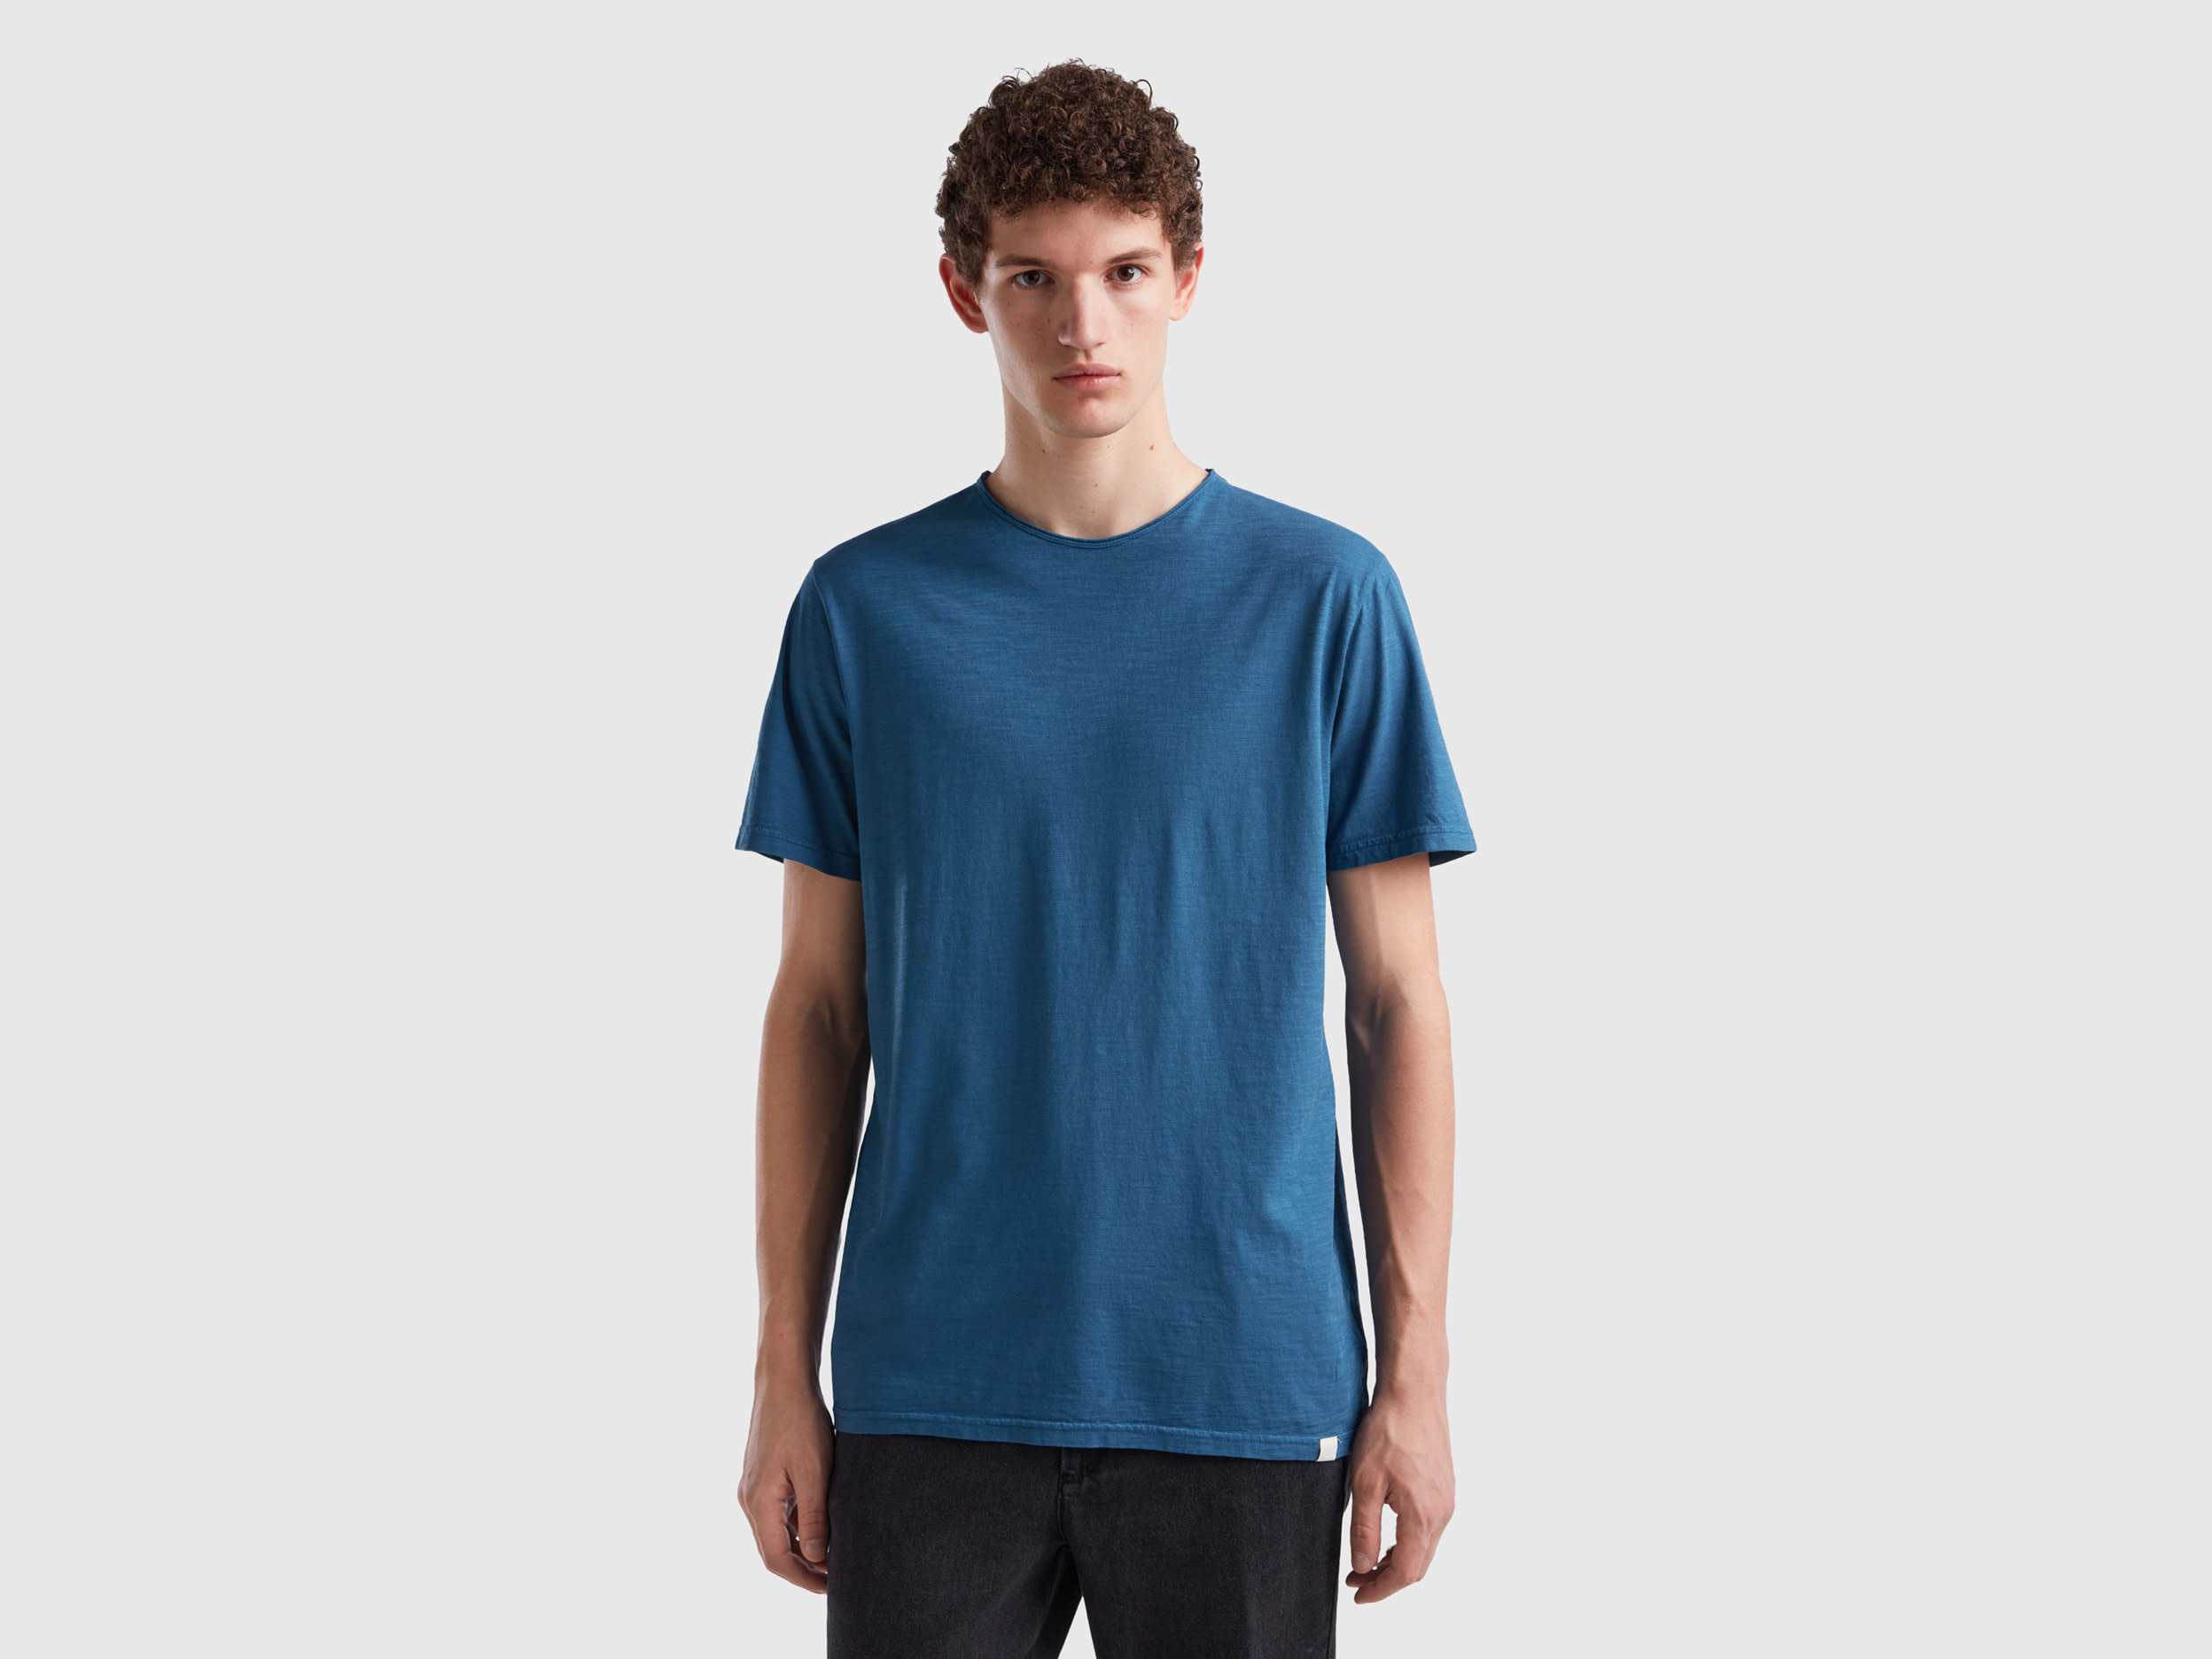 Benetton, Air Force Blue T-shirt In Slub Cotton, size XXL, Air Force Blue, Men